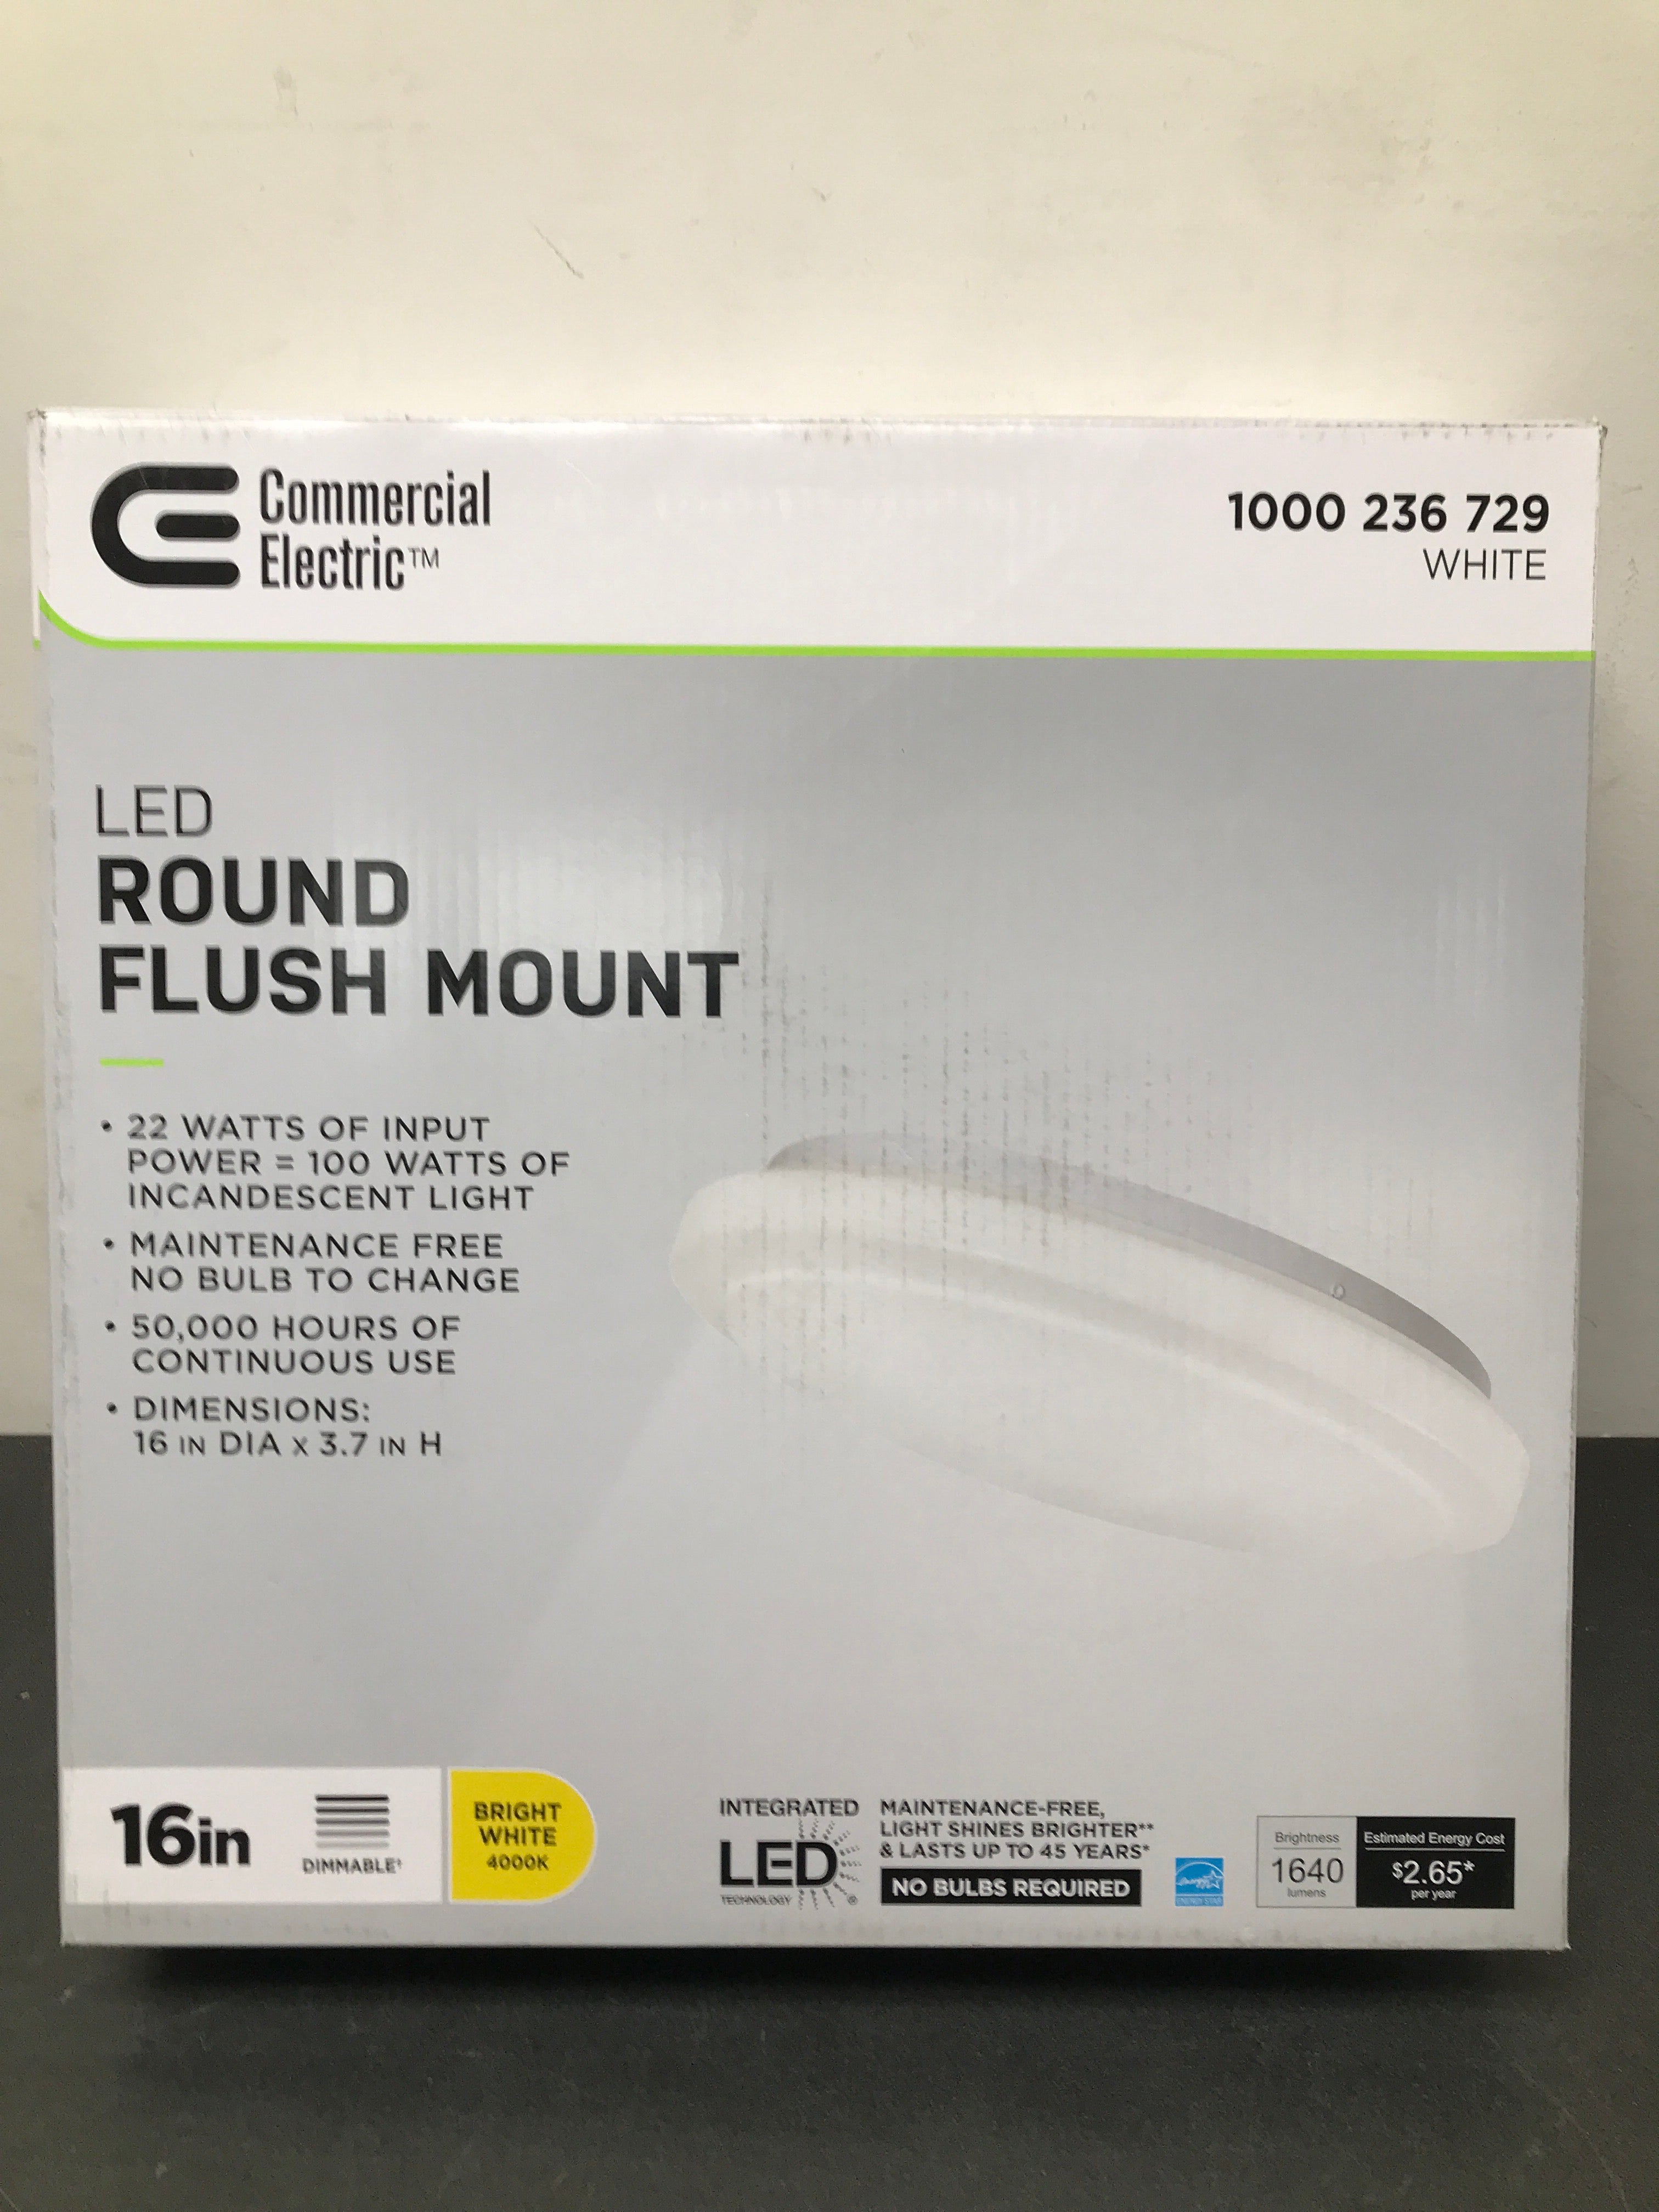 Commercial electric 54075341 16 in. White Round LED Flush Mount Ceiling Light 1640 Lumens 4000K Bright White Dimmable Bedroom Basement Garage